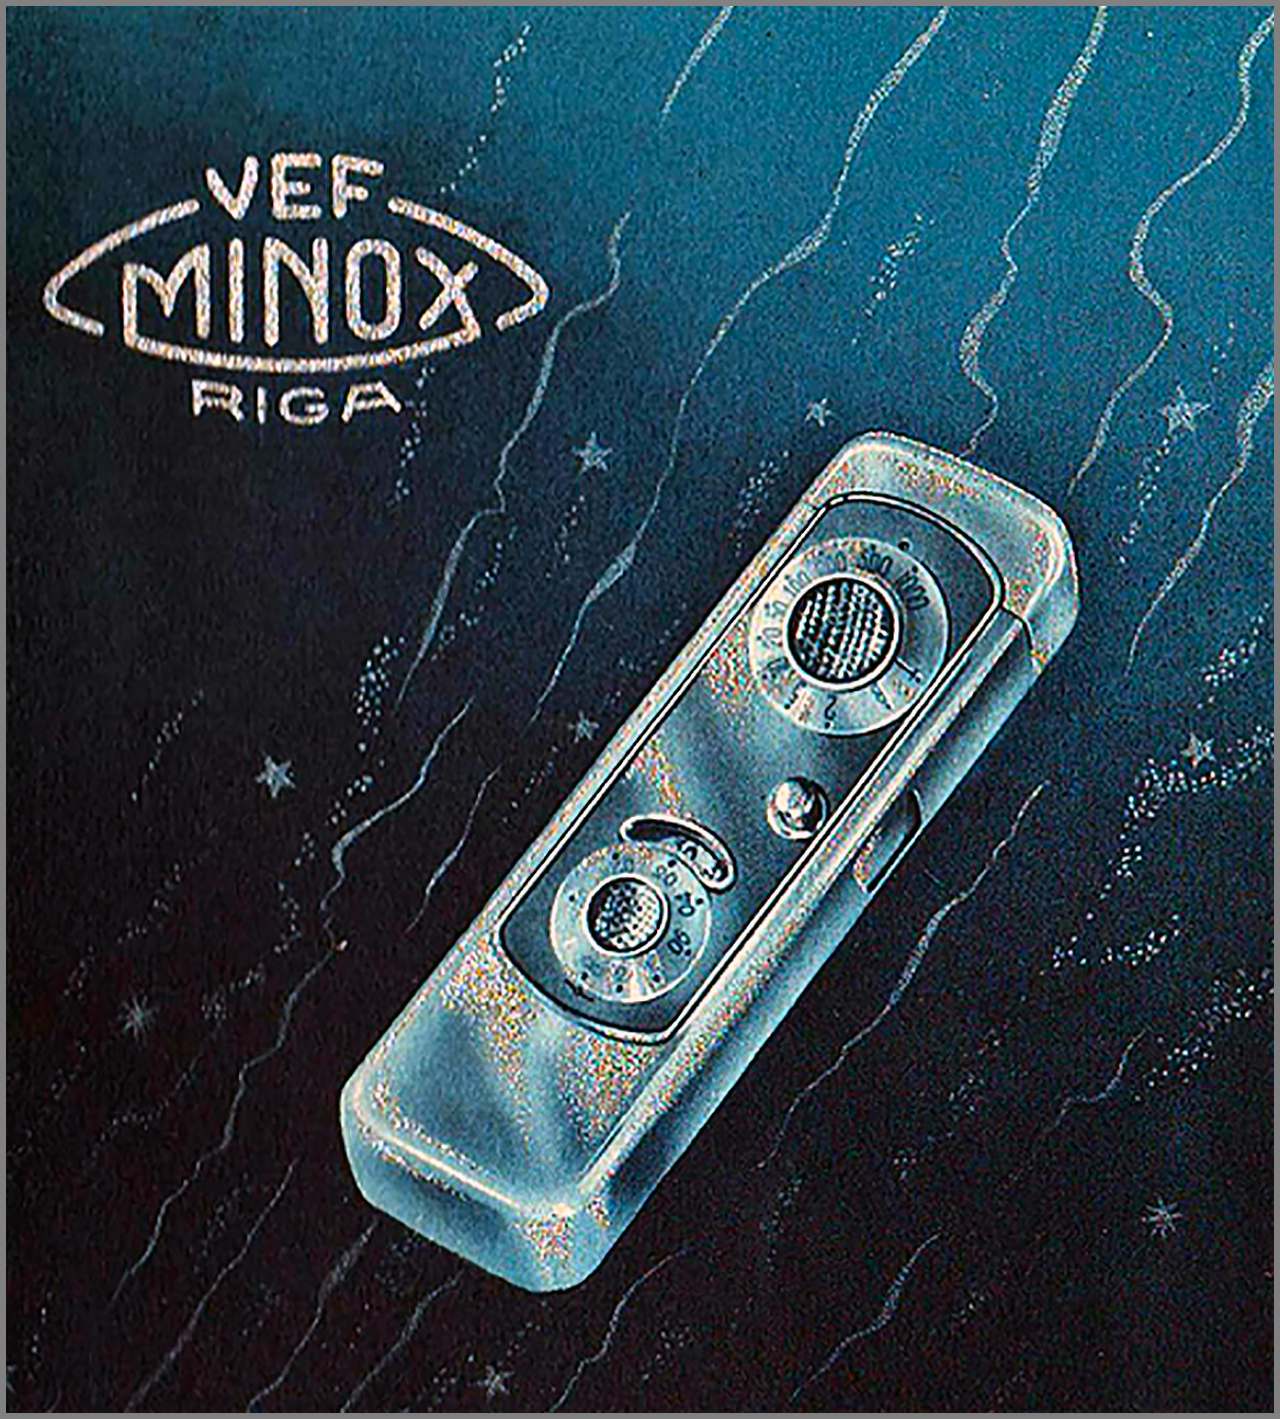 1280x1418px-Fragment-of-«Minox»-manual-cover,-1938-vWA24